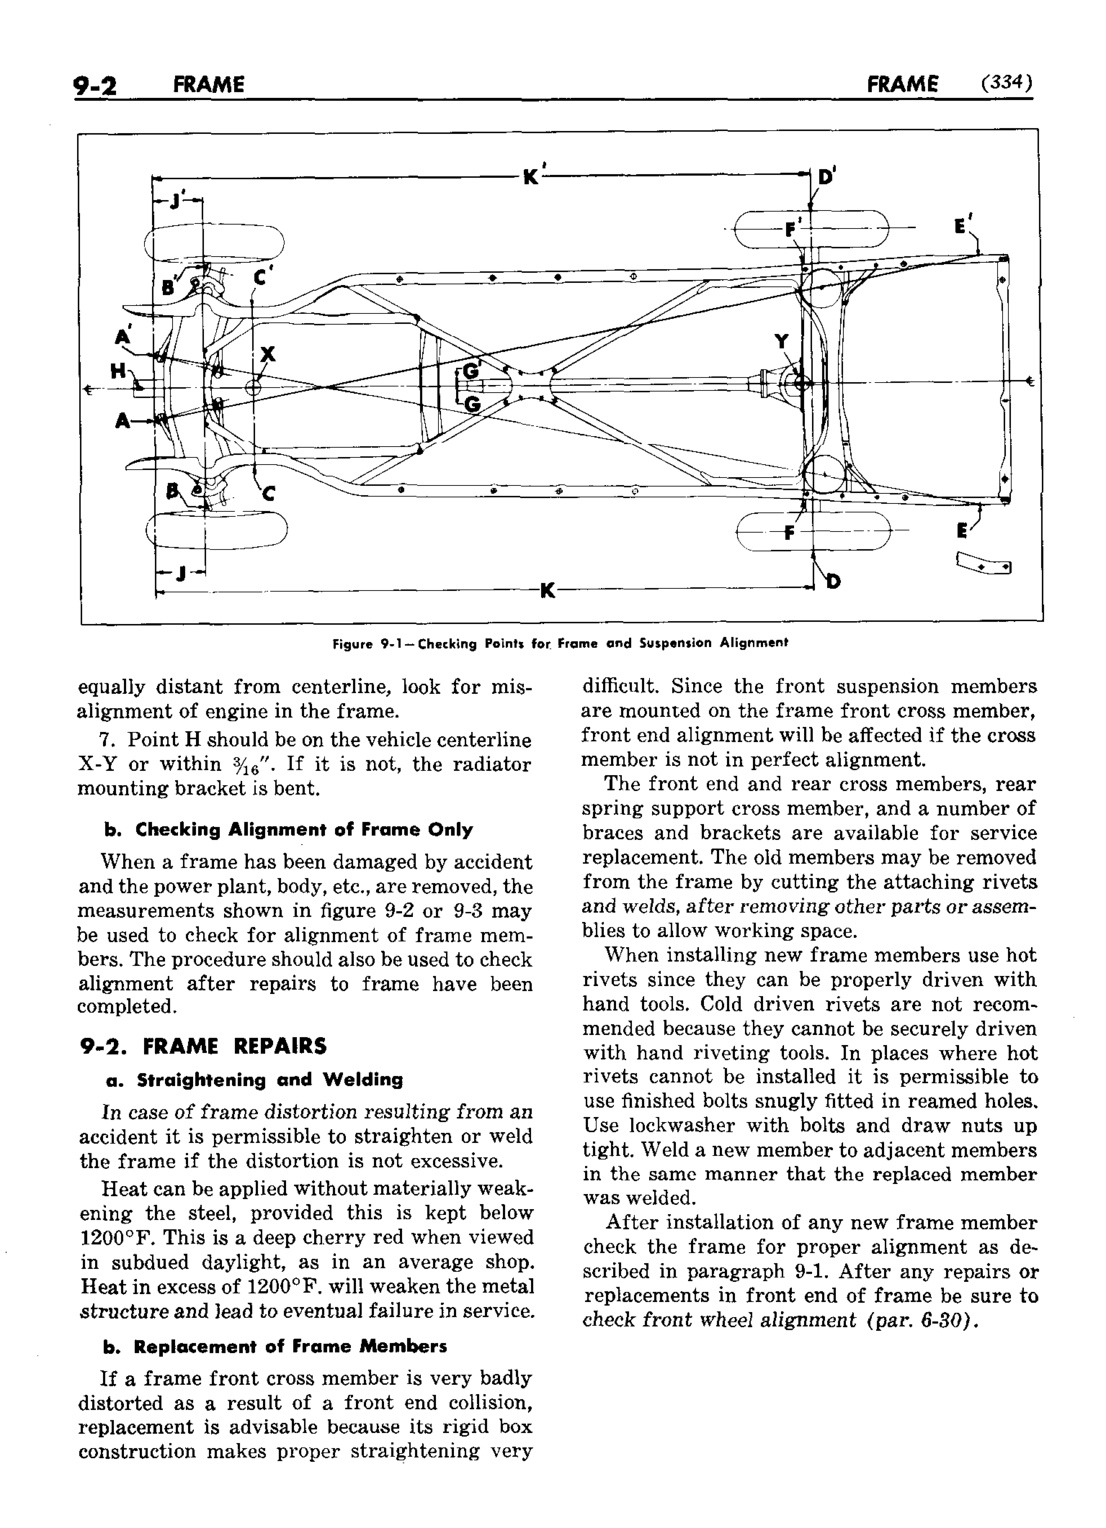 n_10 1952 Buick Shop Manual - Frame-002-002.jpg